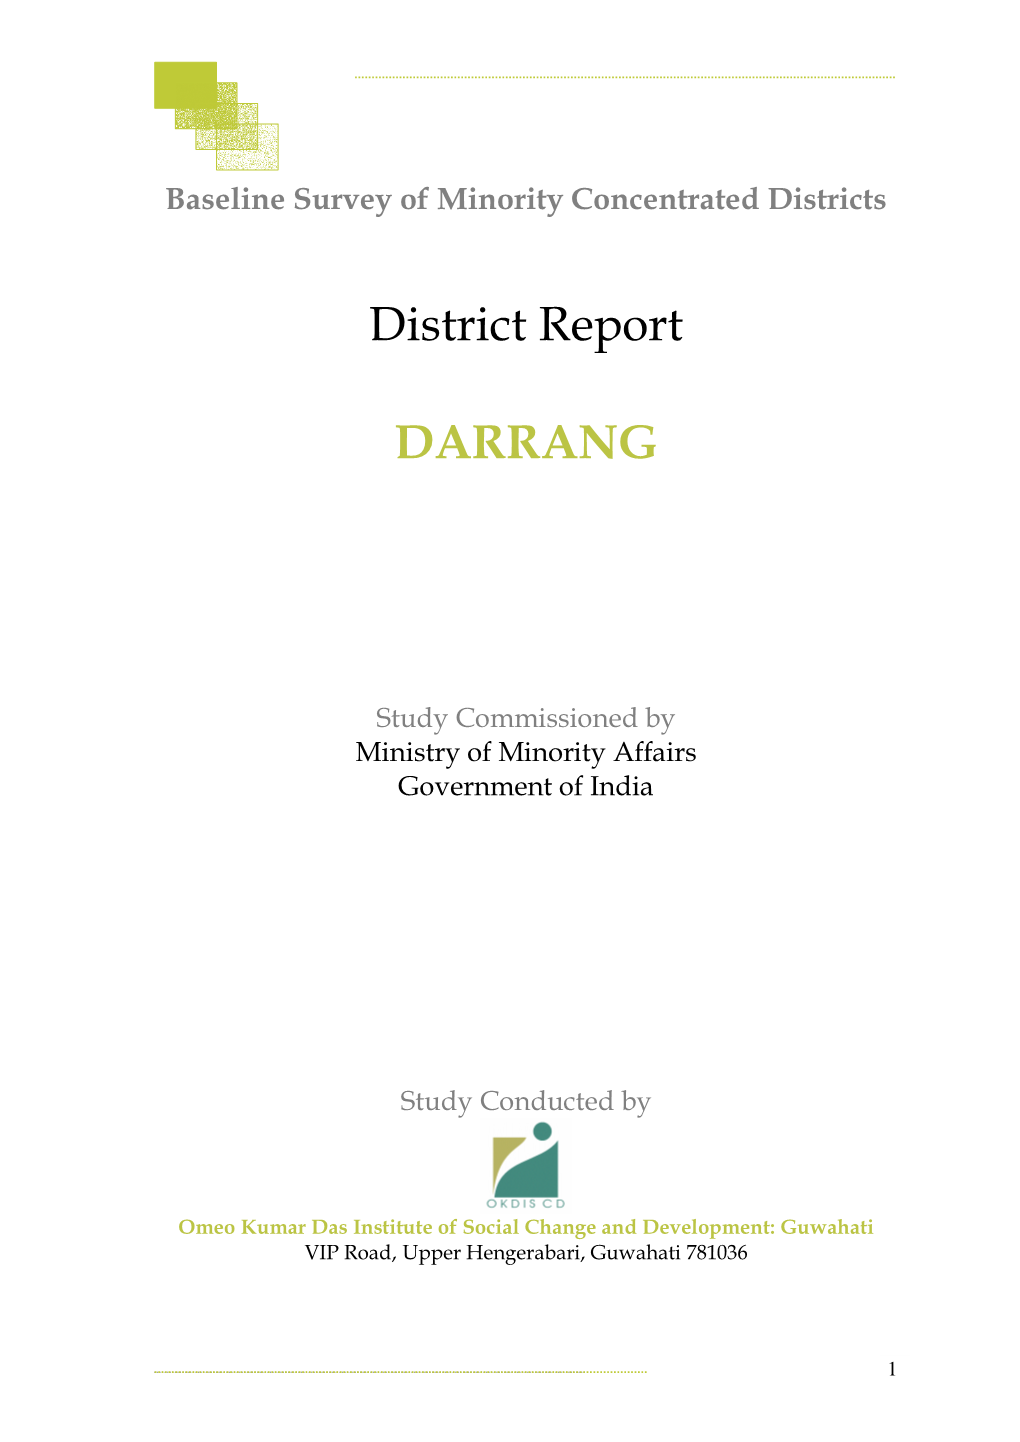 District Report DARRANG